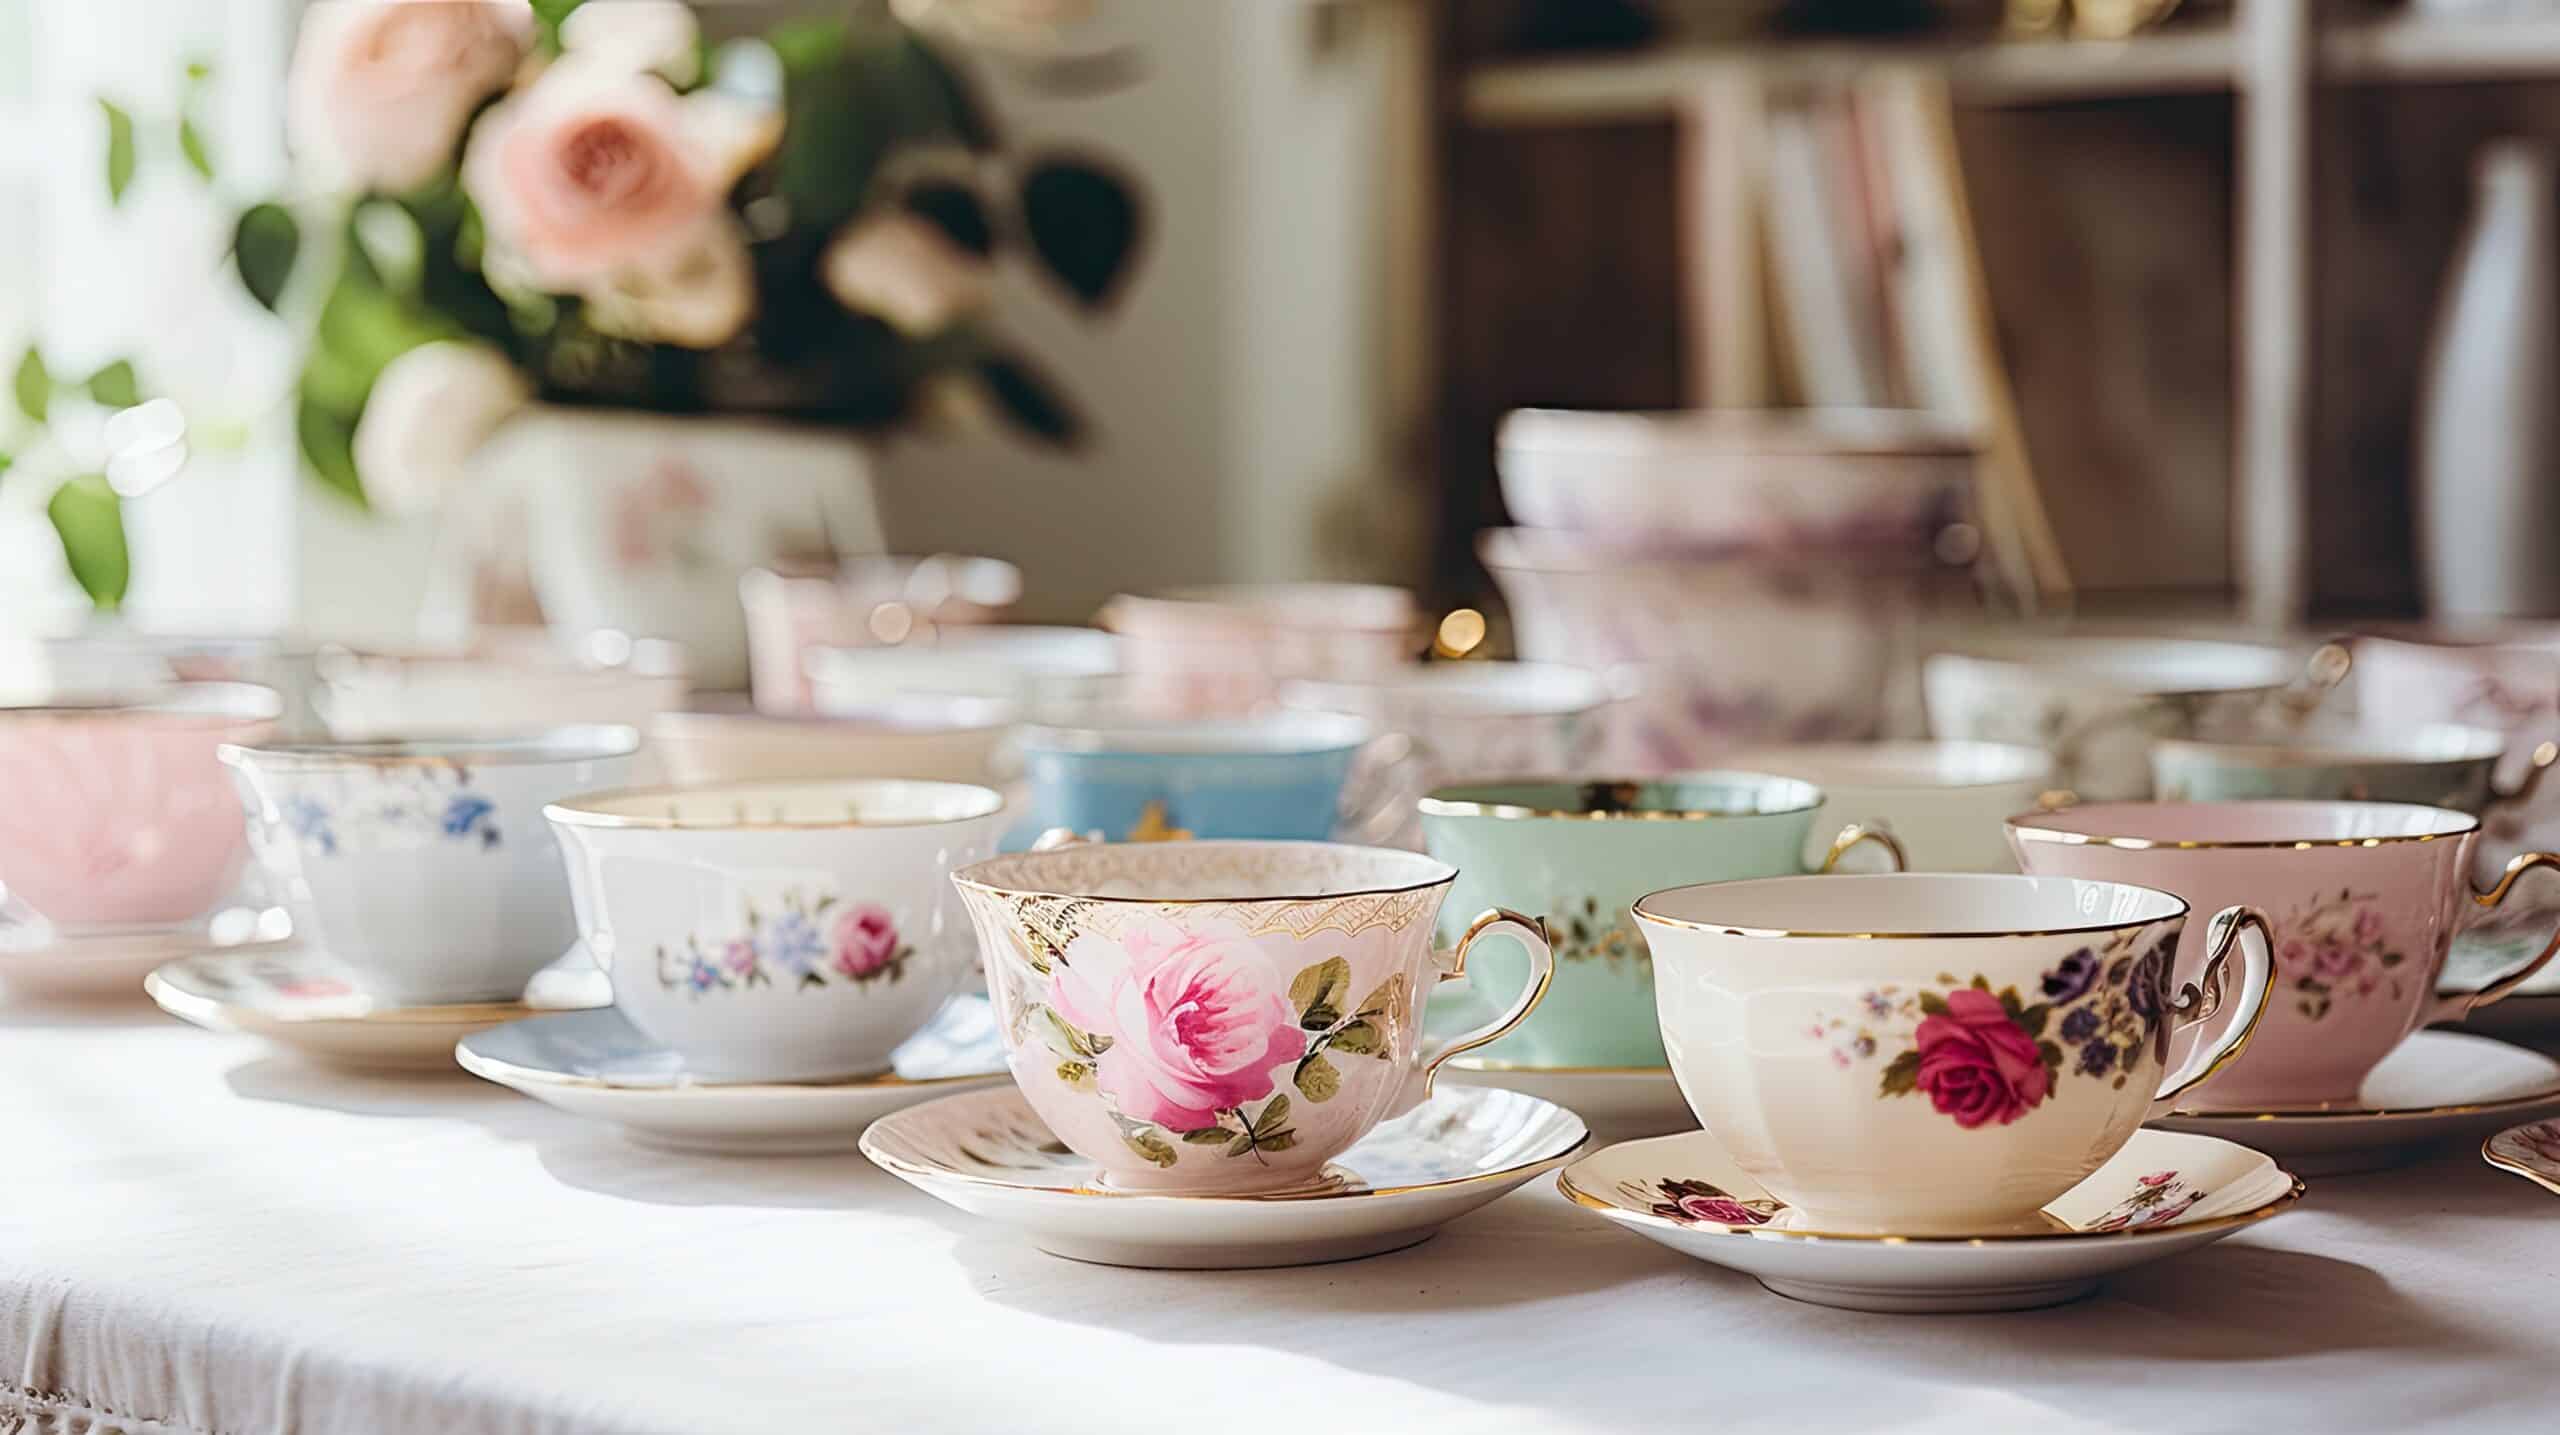 photo-collection-vintage-teacups-table-cozy-kitchen-backdrop